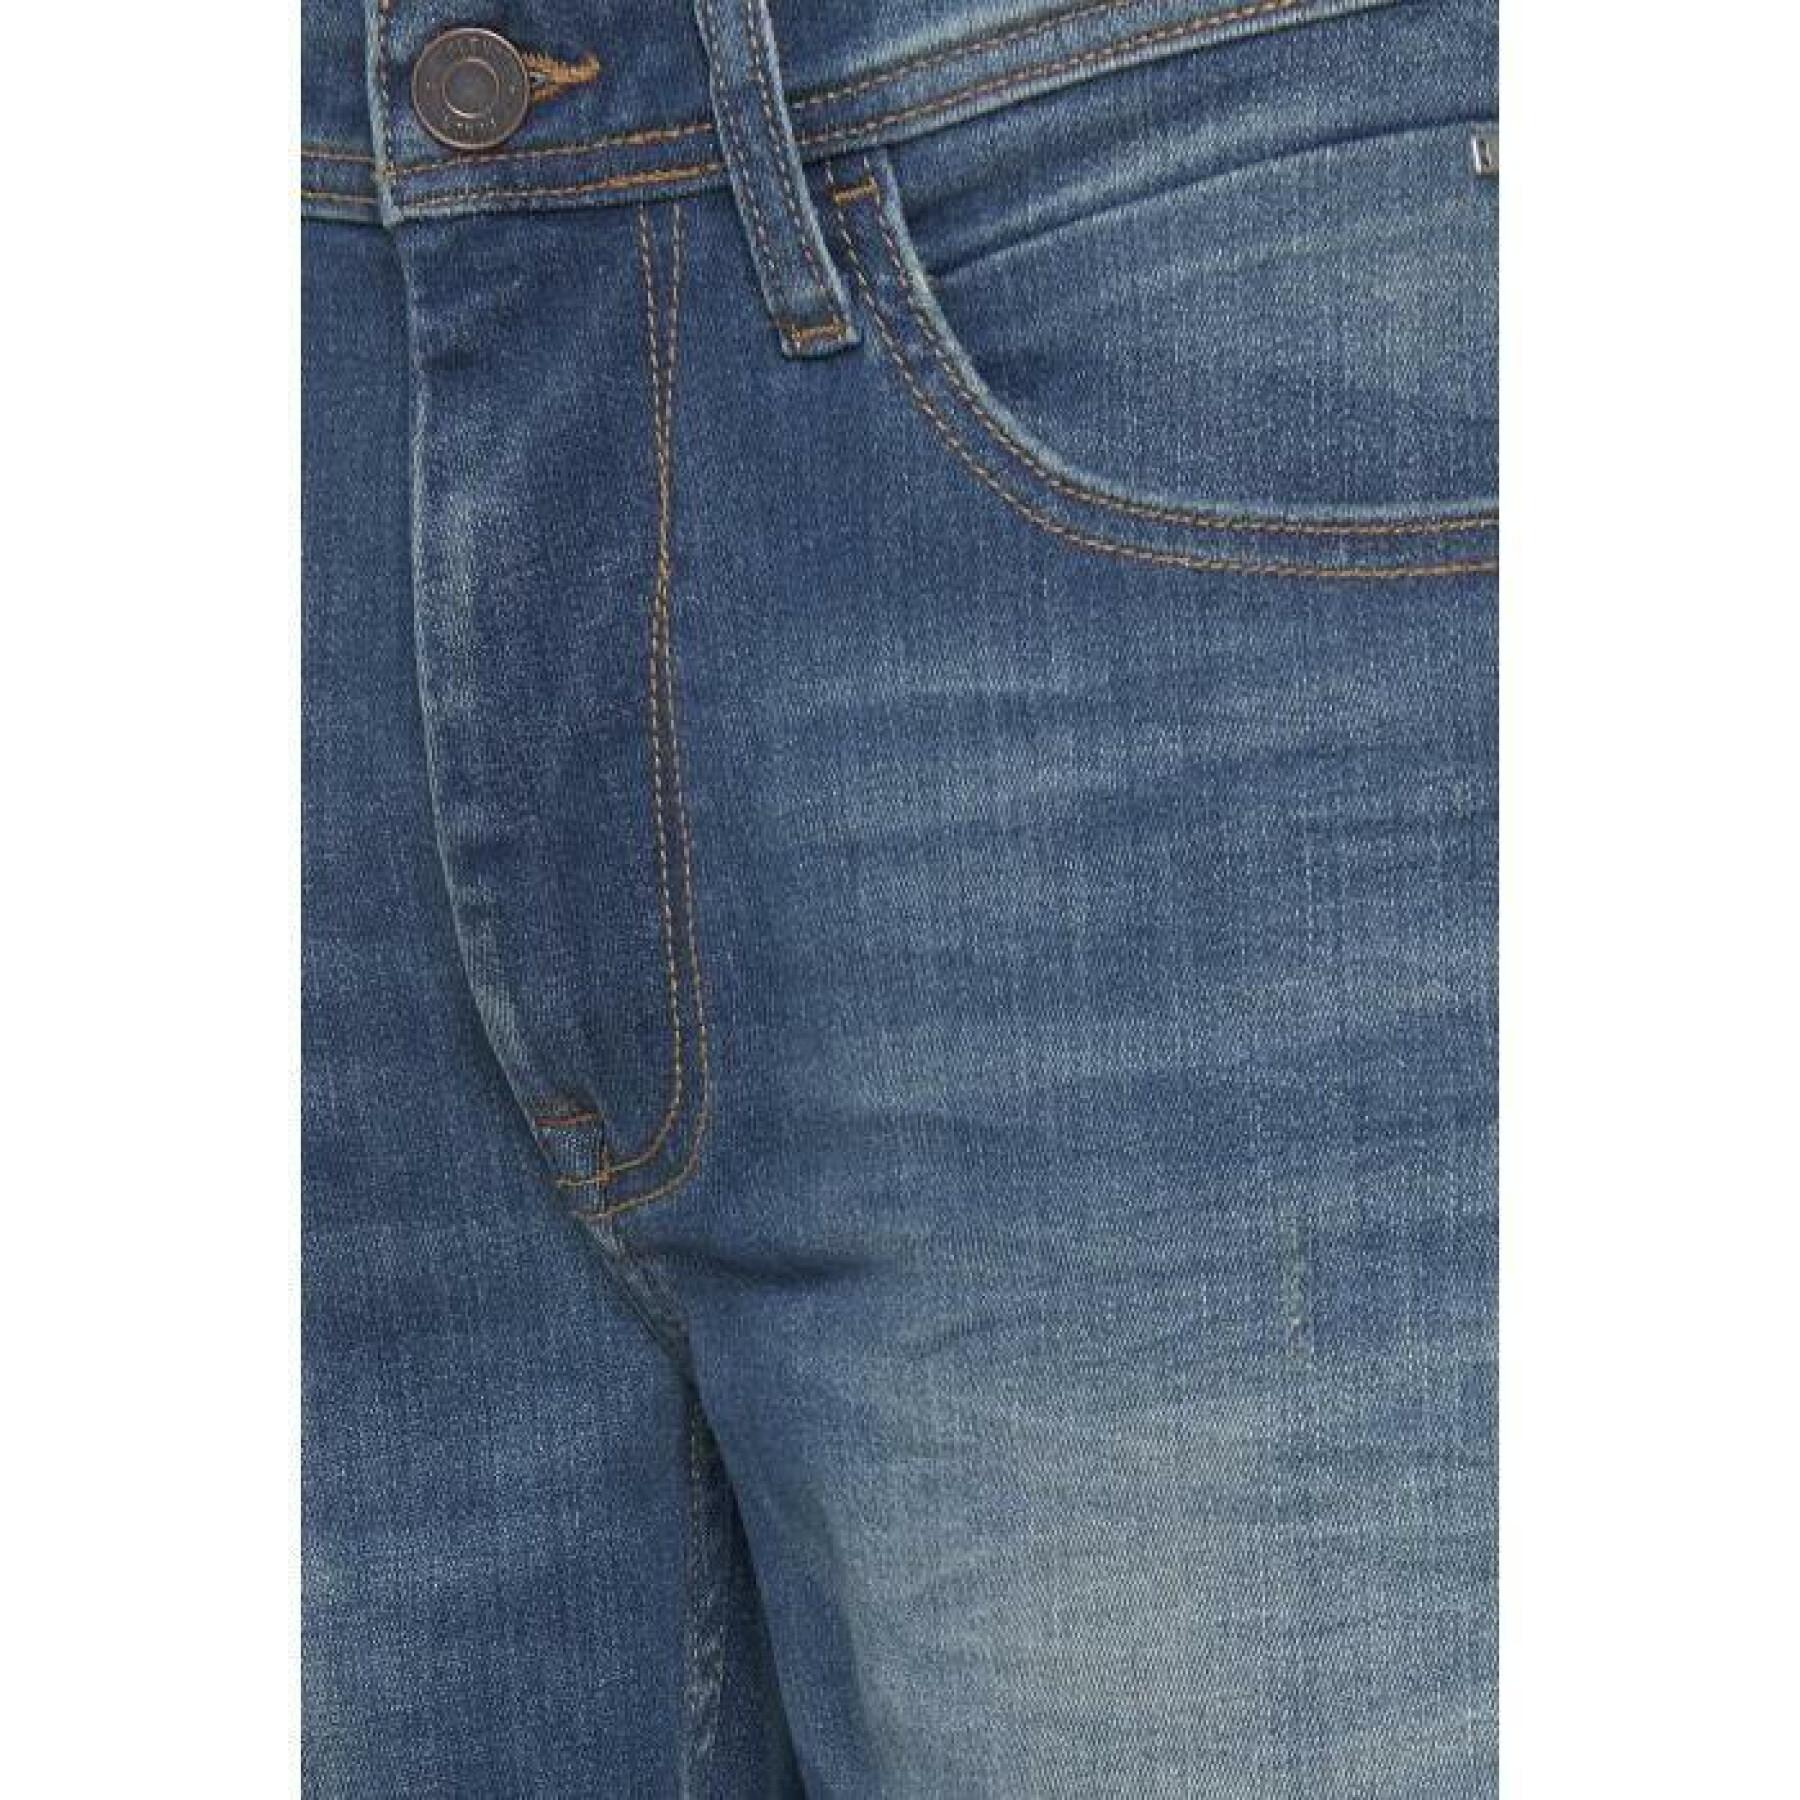 Damskie jeansy slim fit Blend Twister - Multiflex